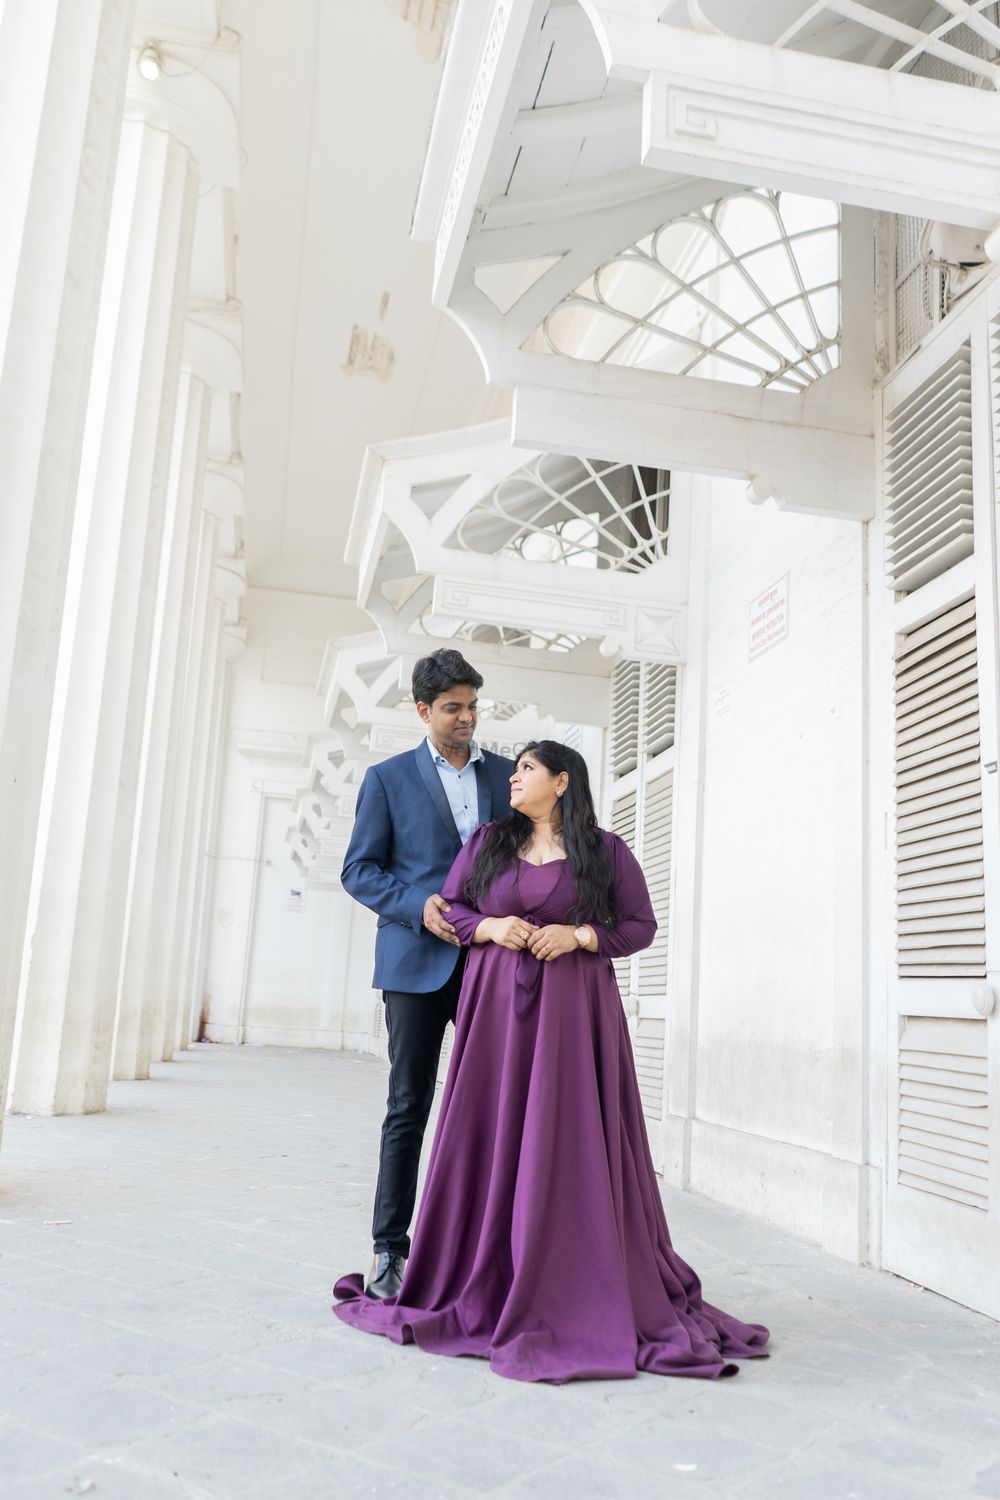 Photo From Pre wedding - By Deepak Kumar Photography